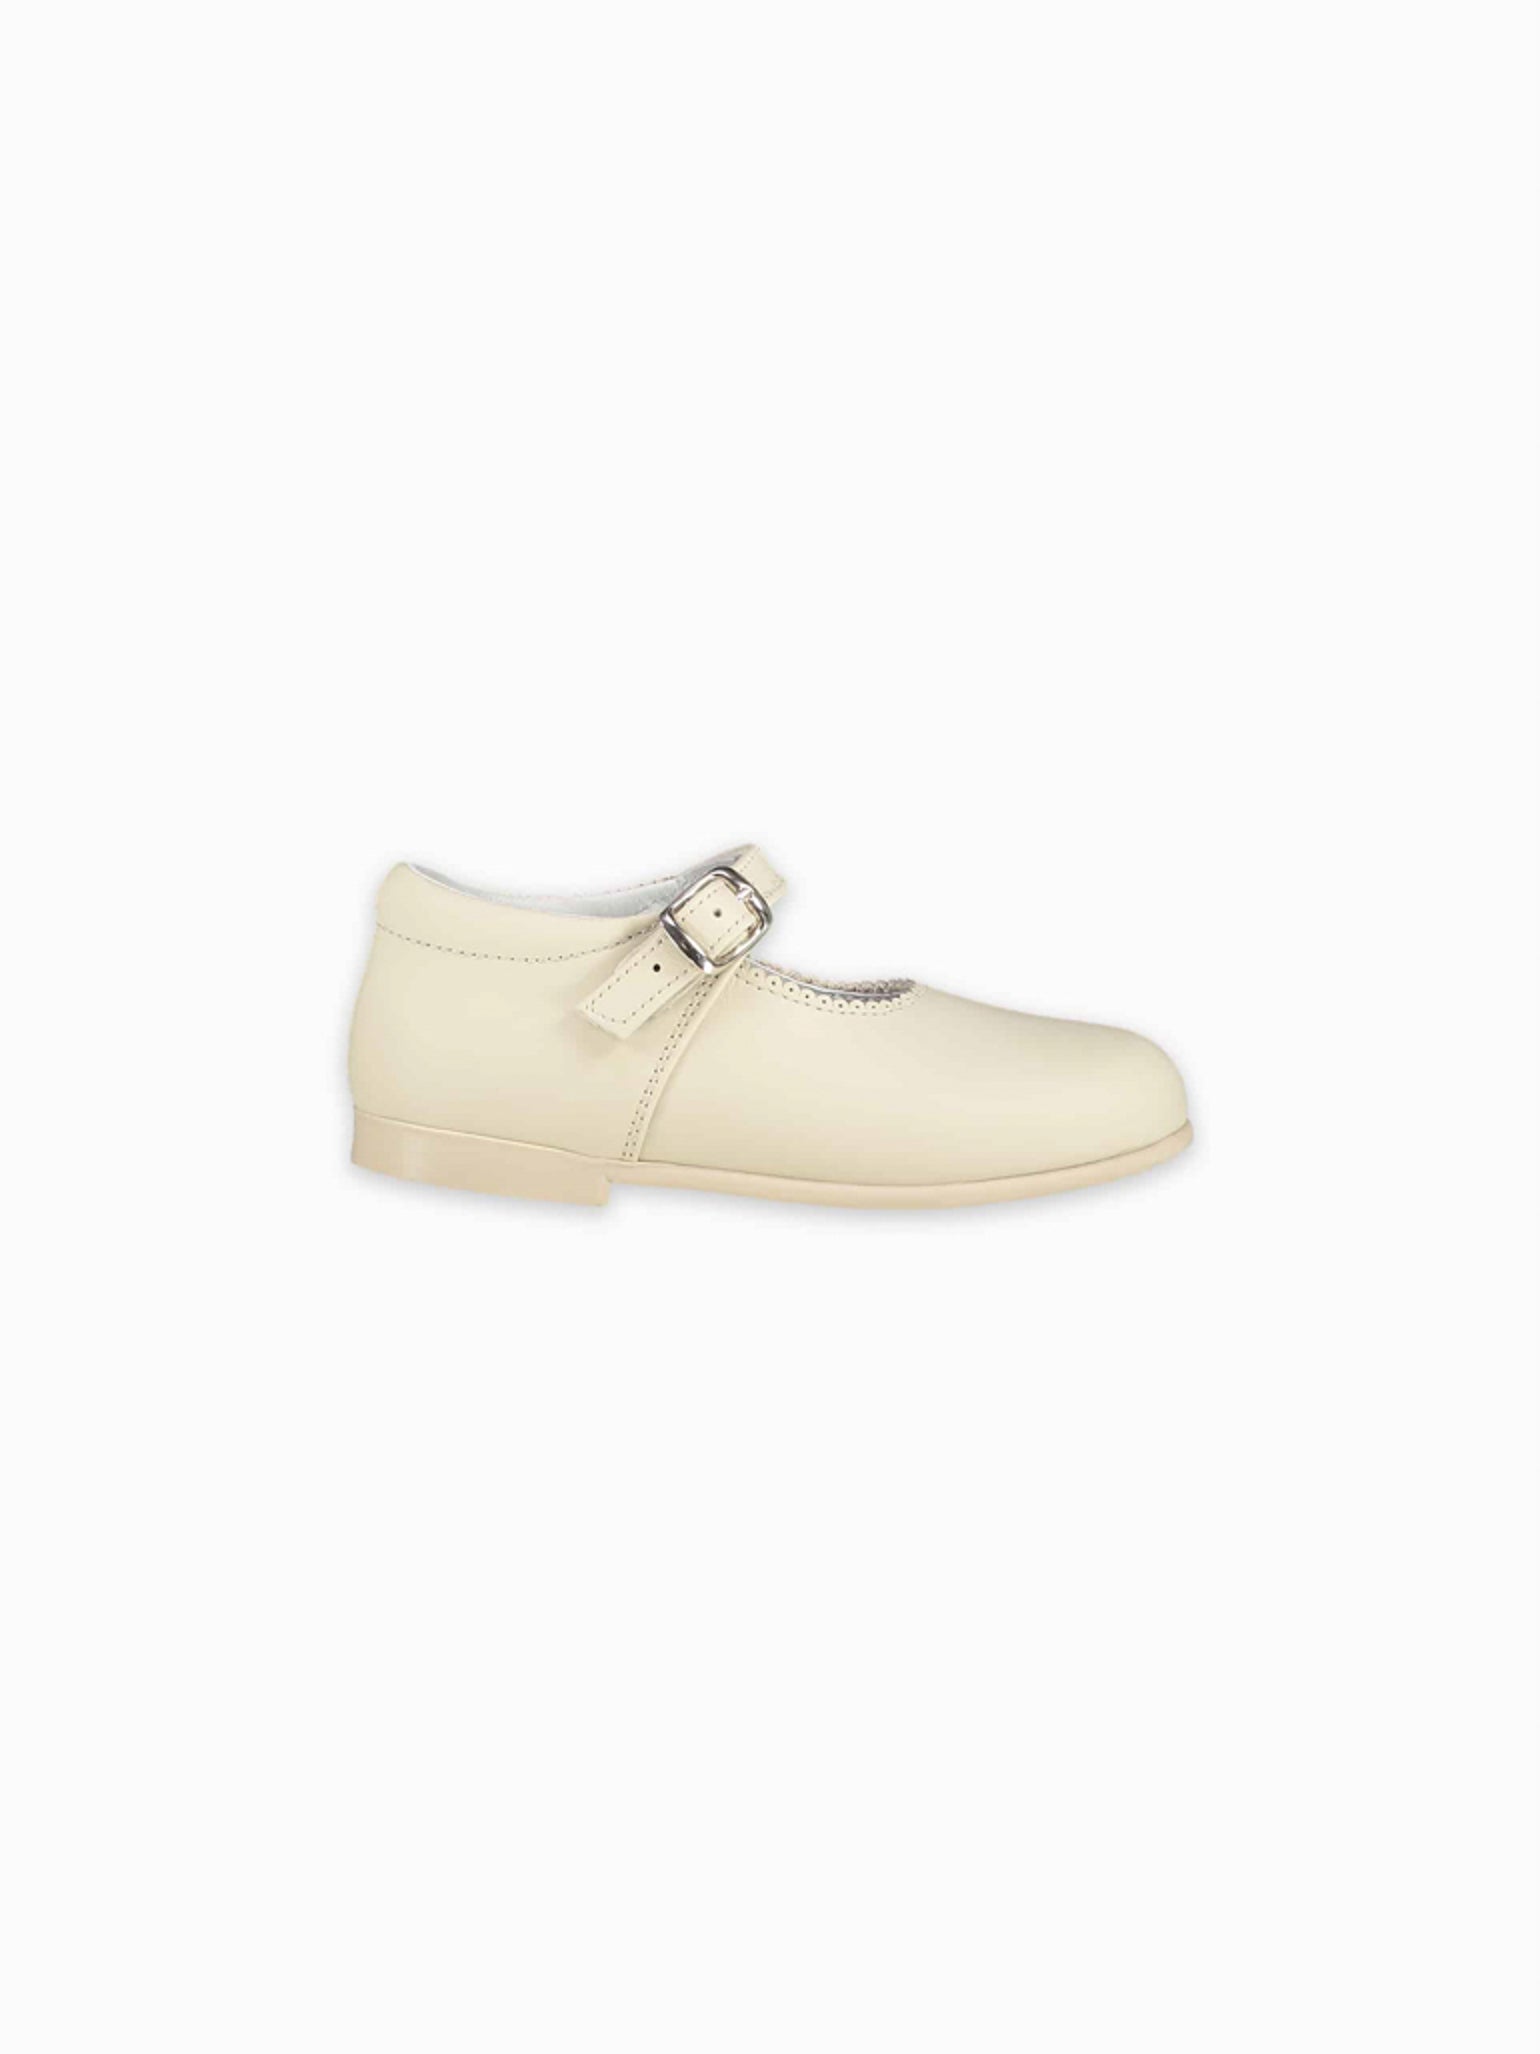 Ivory Leather Toddler Mary Jane Shoes